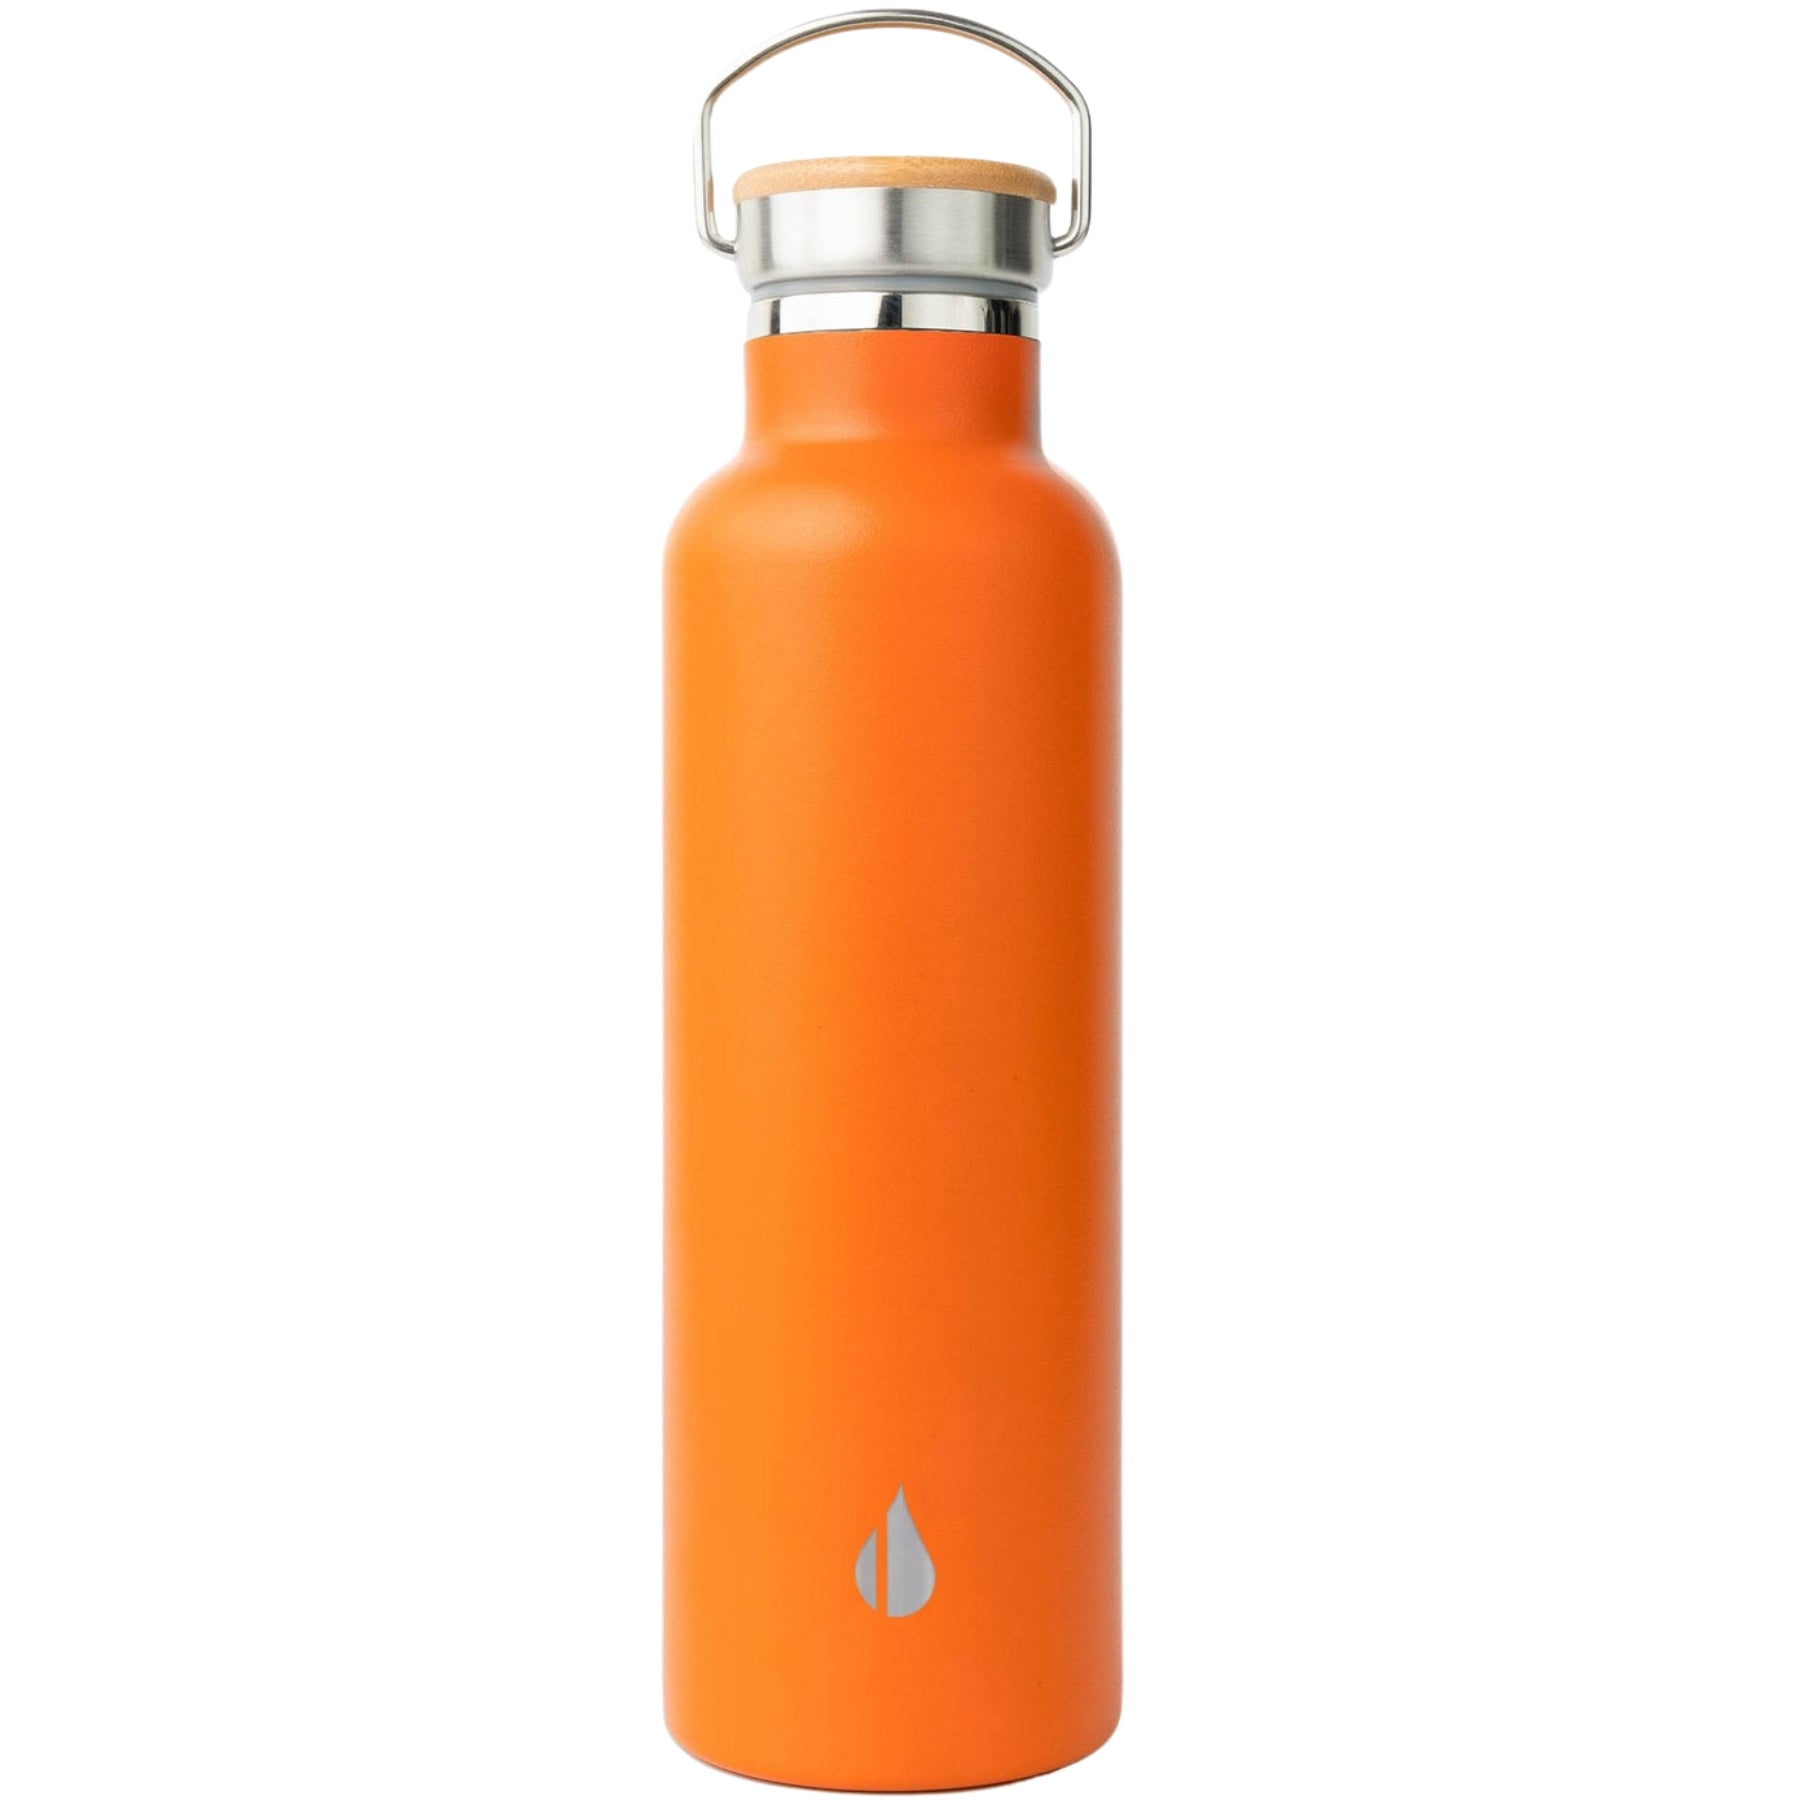 Customizable Elemental® 25 oz Stainless Steel Insulated Bottle in orange